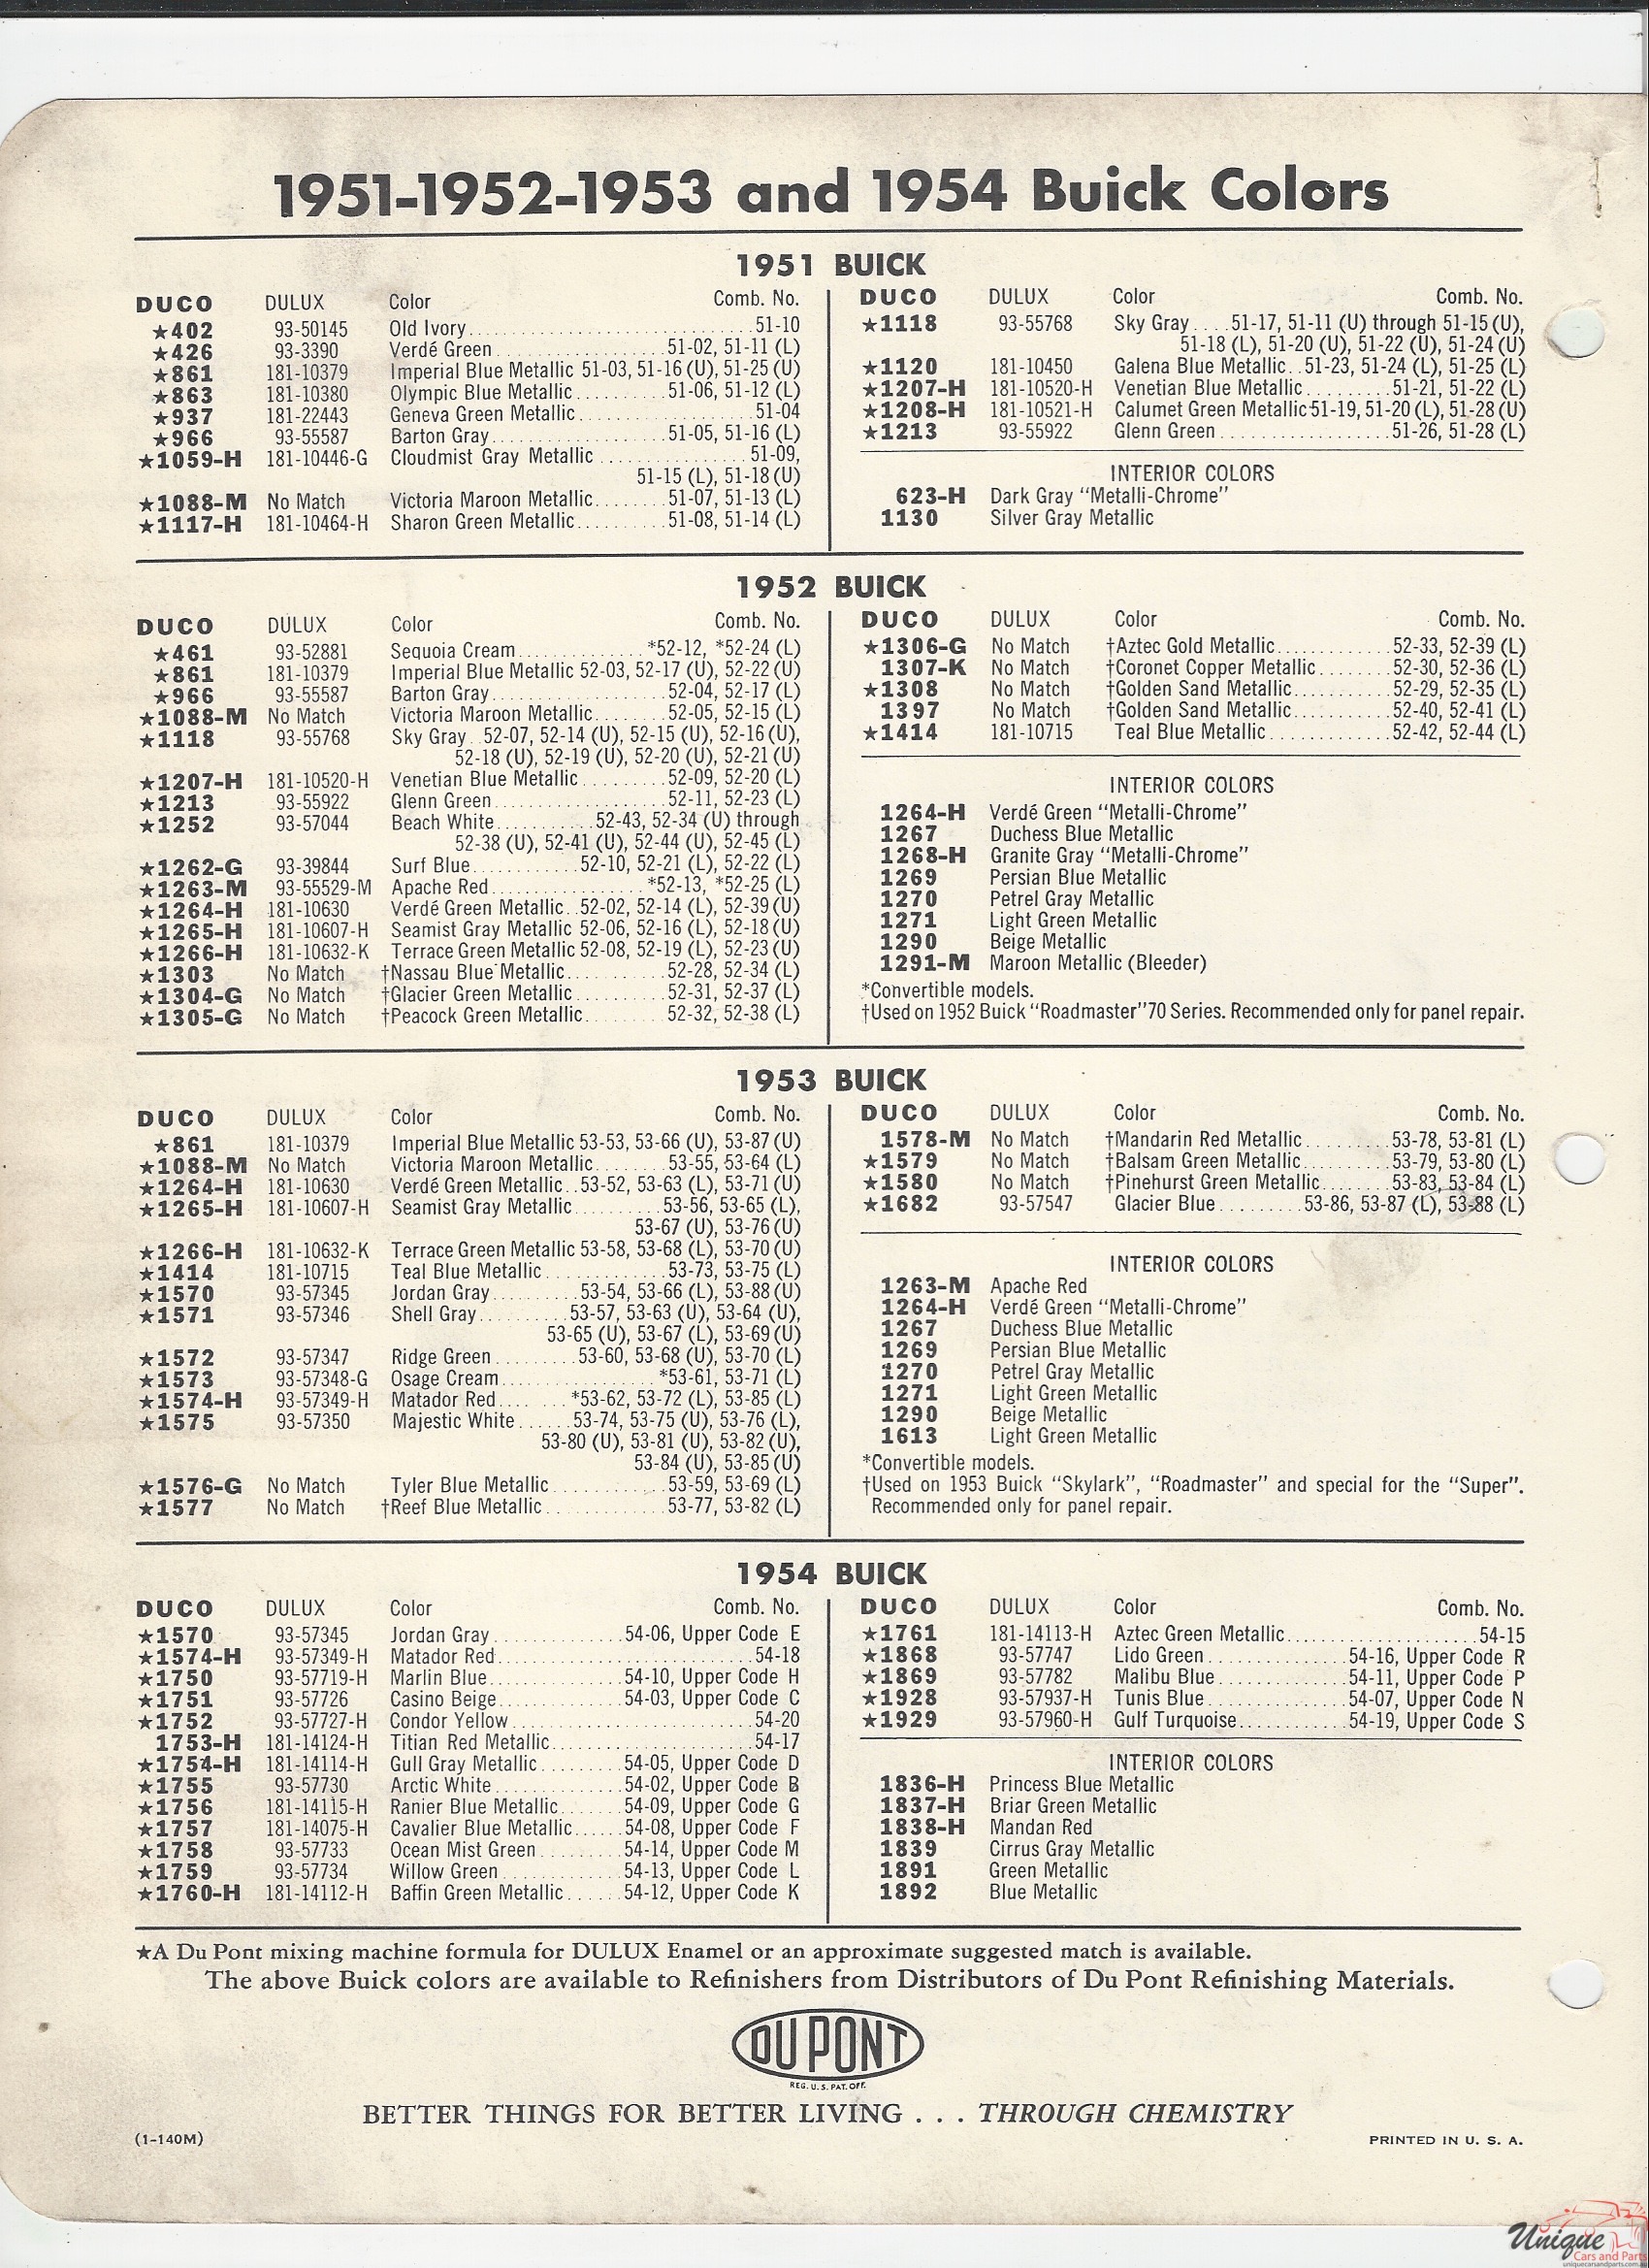 1955 Buick-3 Paint Charts